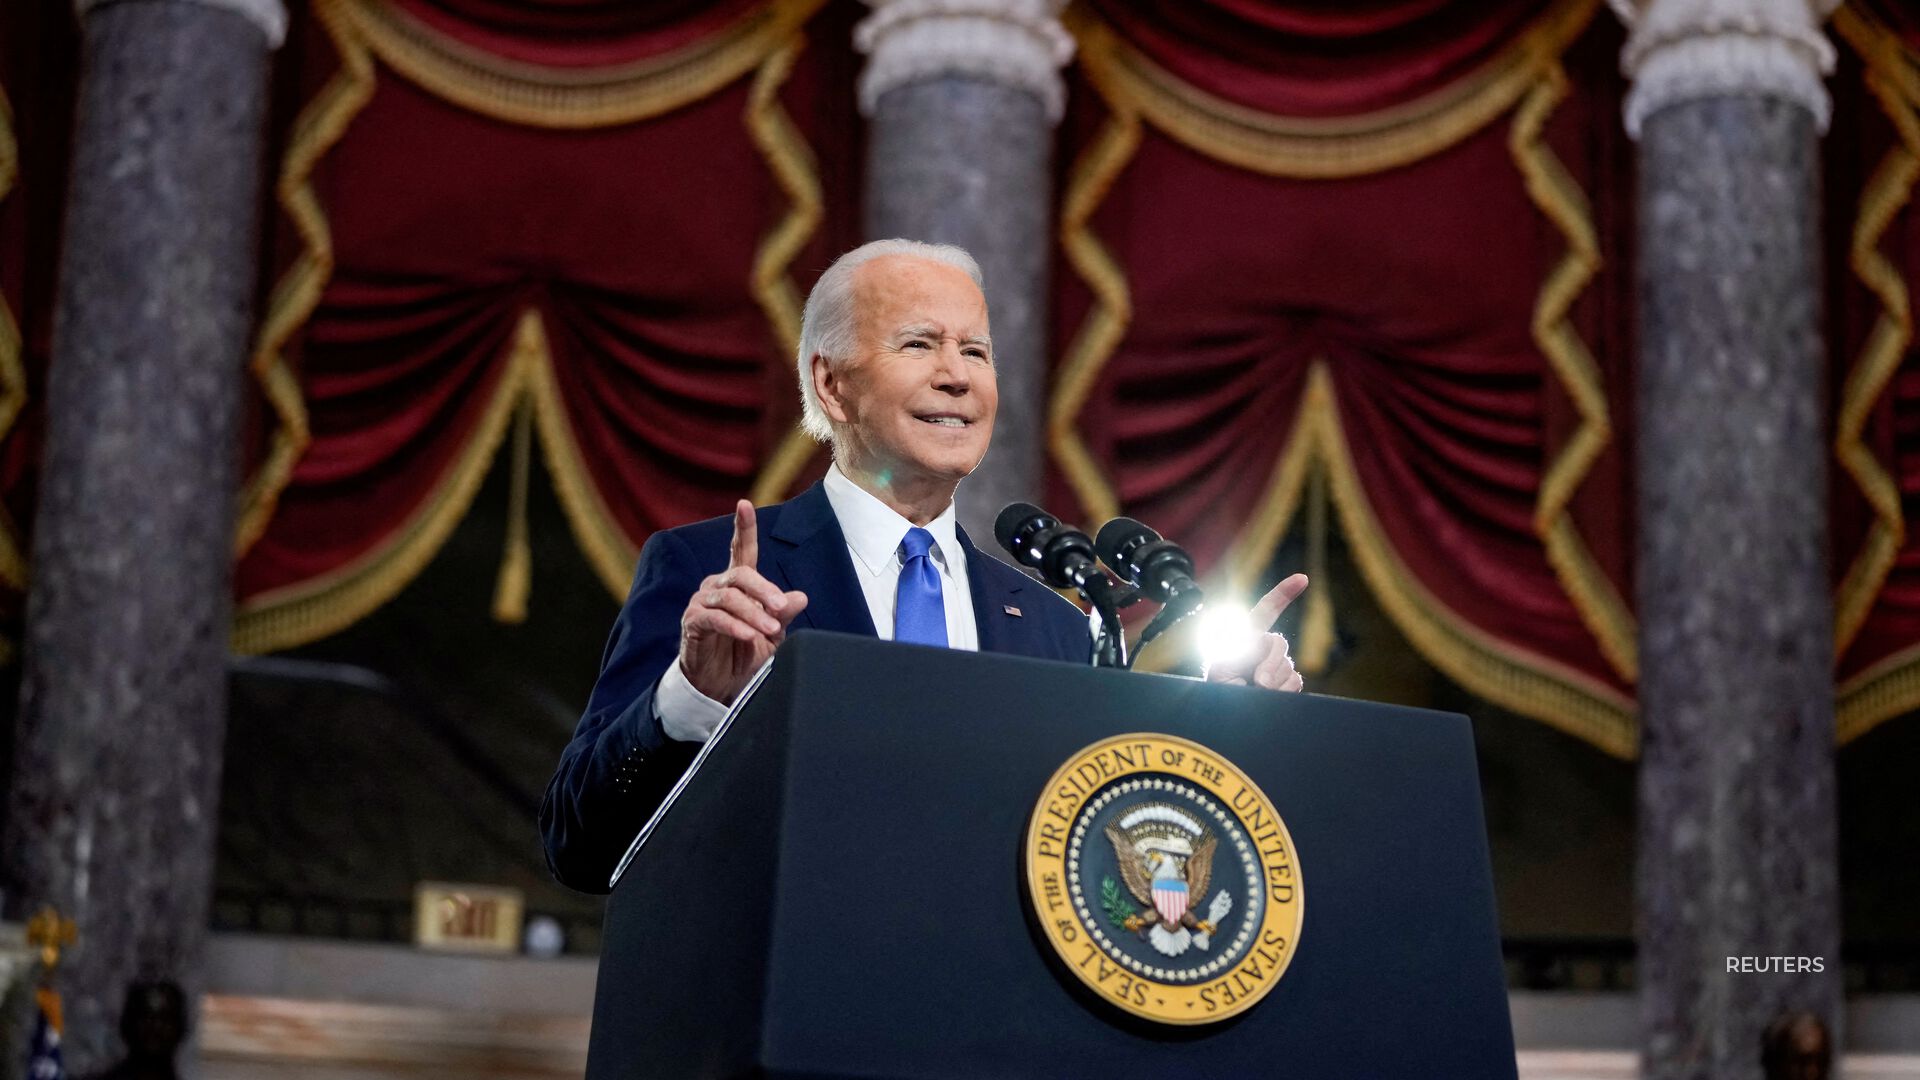 Biden marked the anniversary of Jan. 6